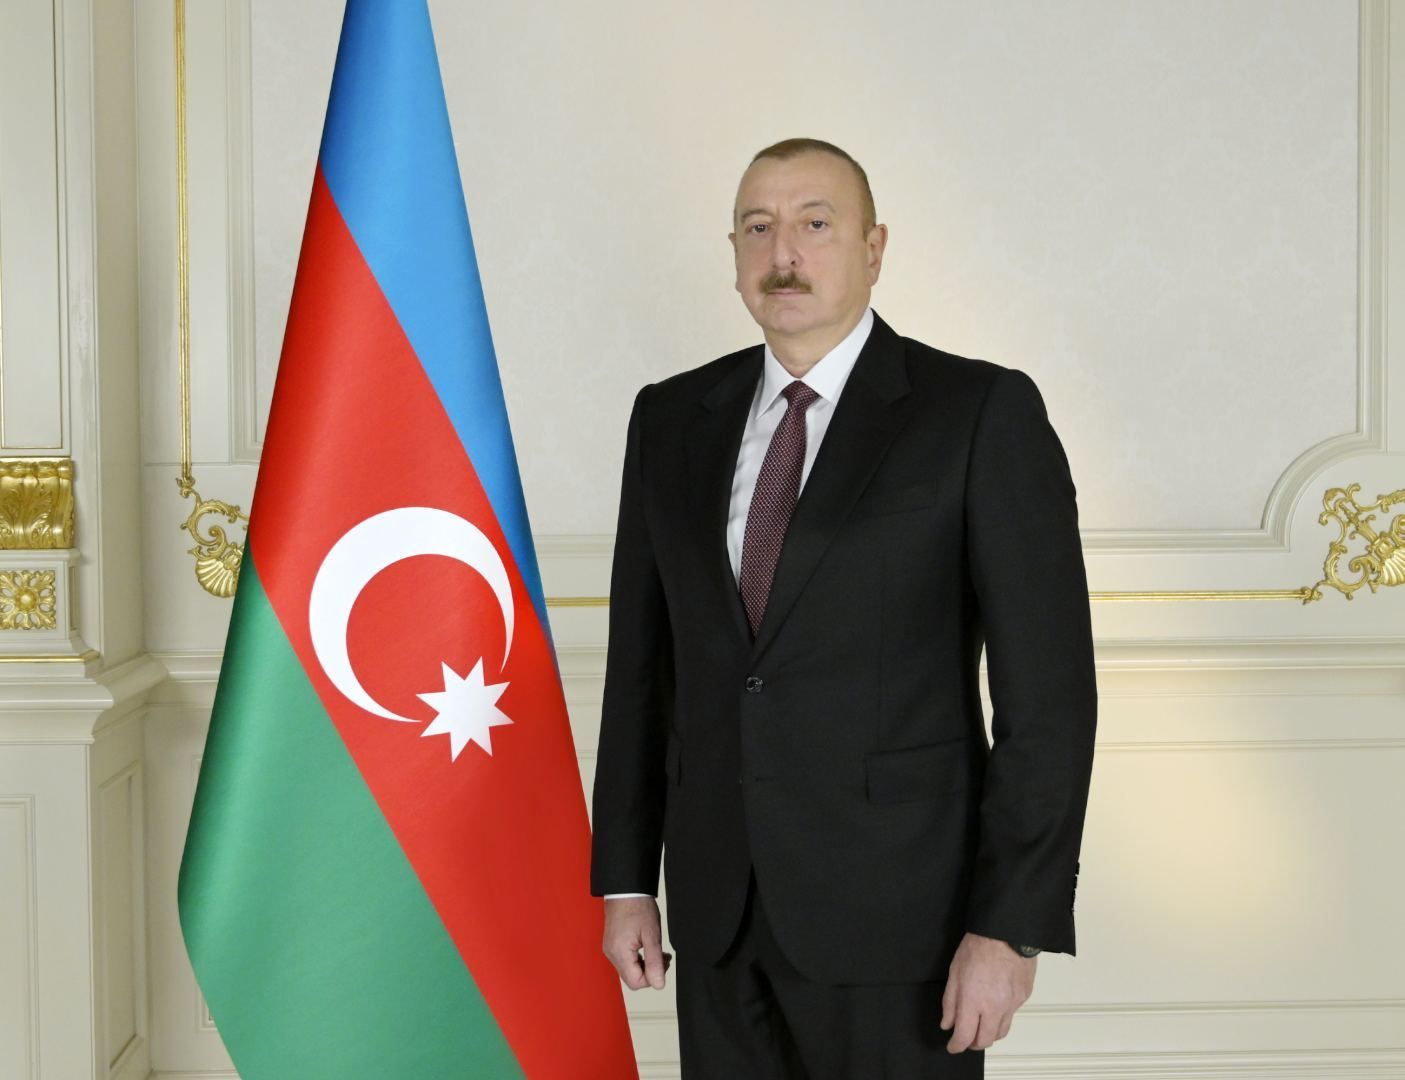 President Ilham Aliyev addresses participants of 29th High-Level Meeting organized by Nizami Ganjavi International Center